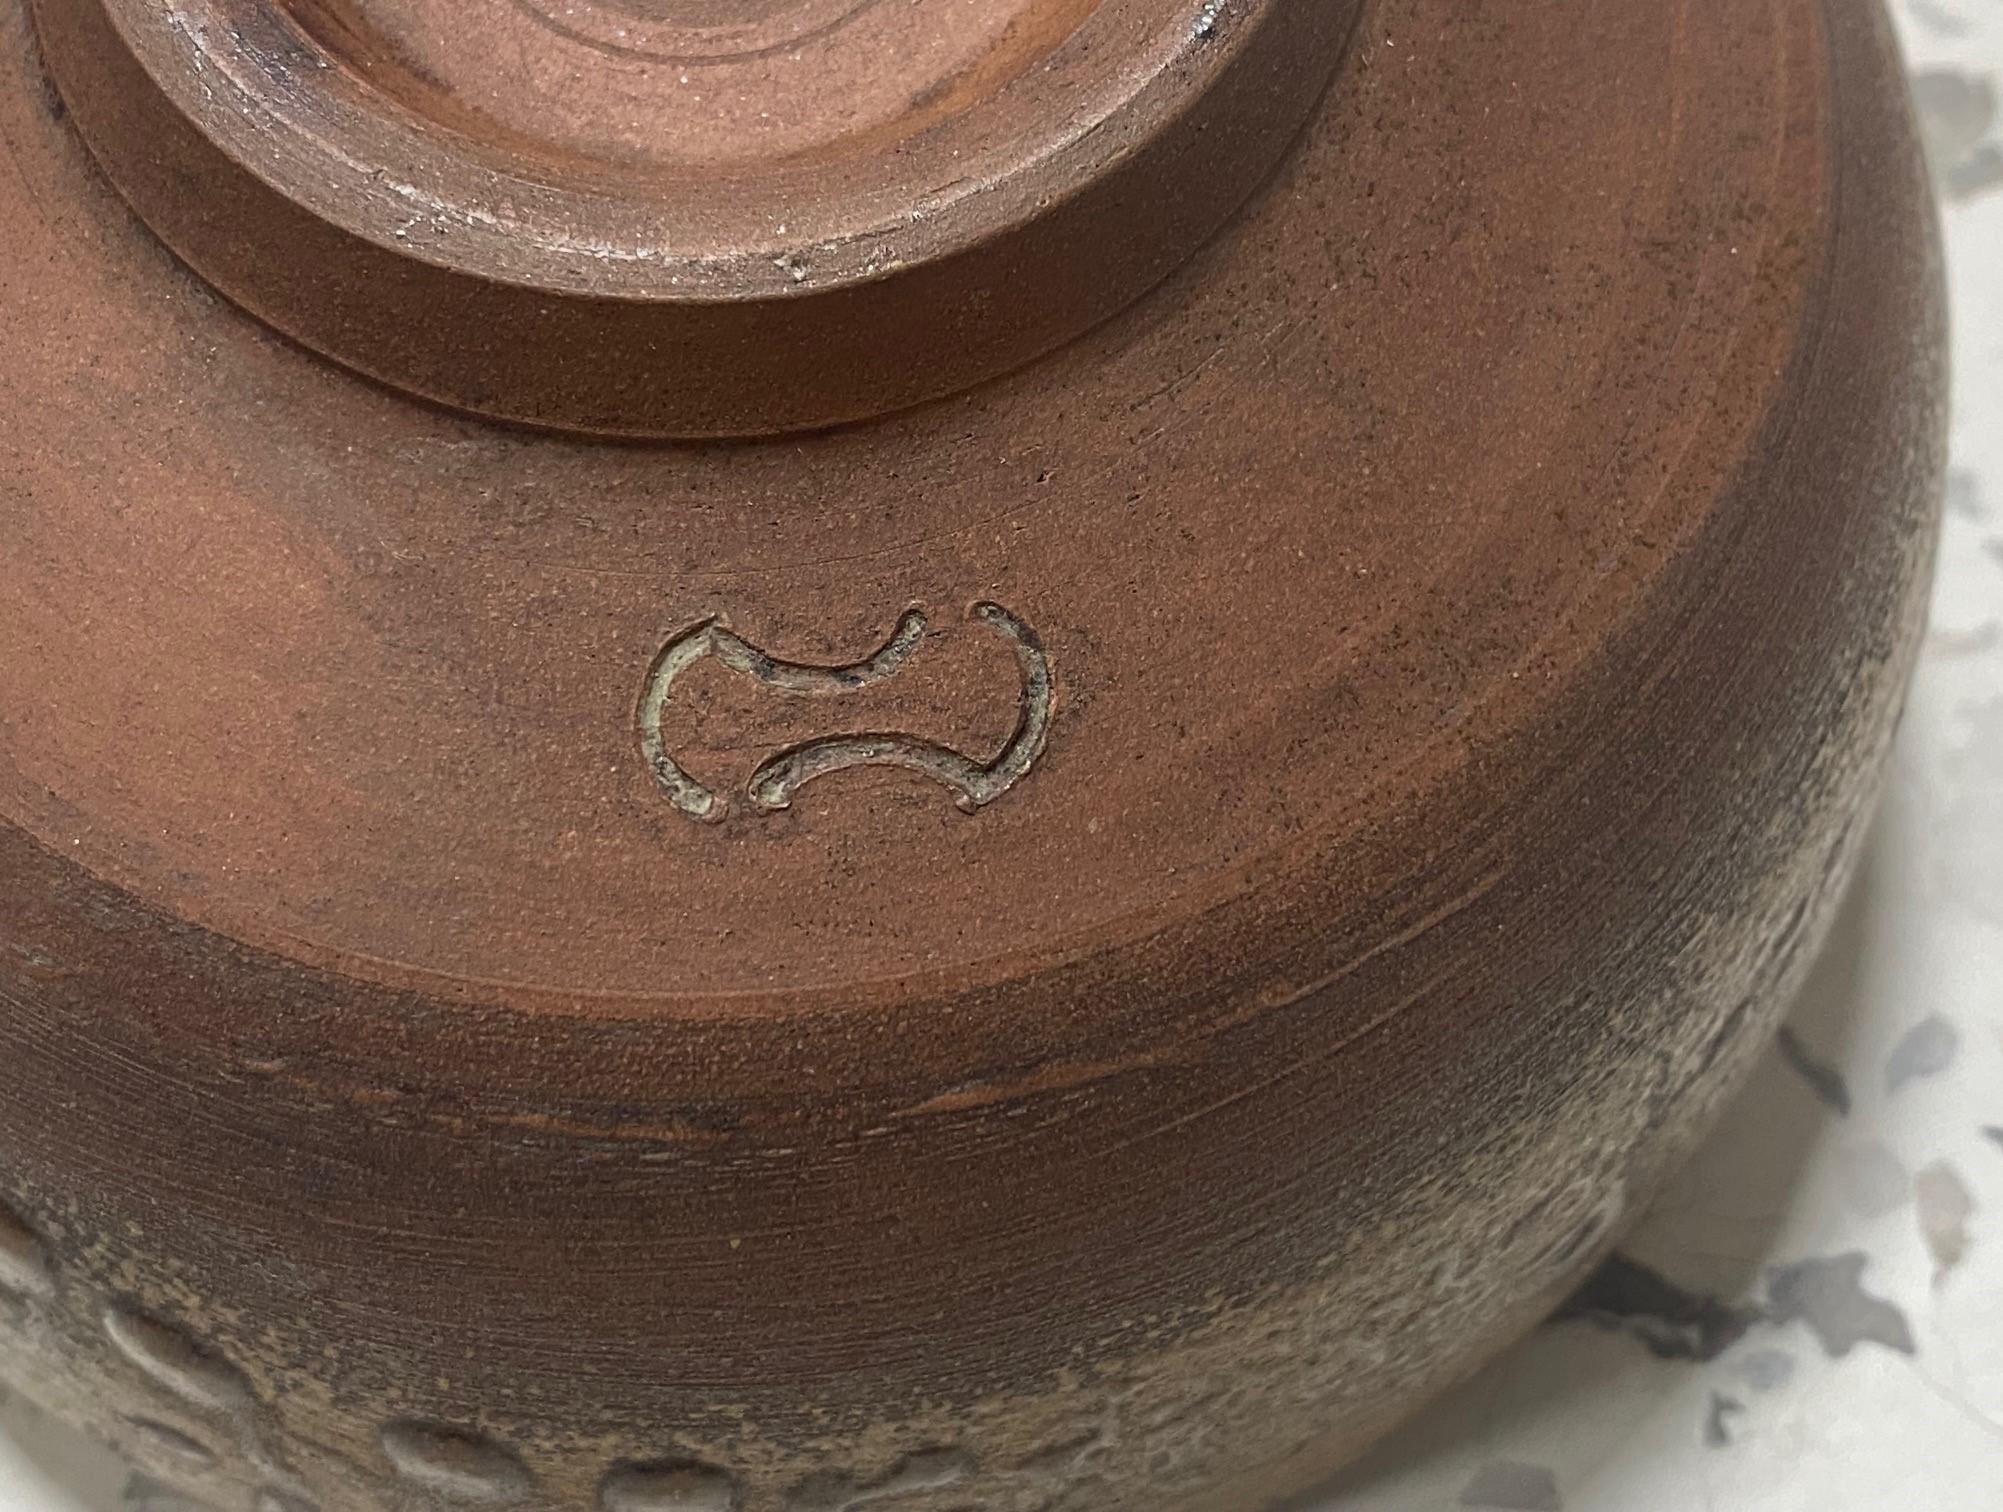 Kaneshige Toyo National Treasure Signed Japanese Bizen Pottery Chawan Tea Bowl For Sale 4